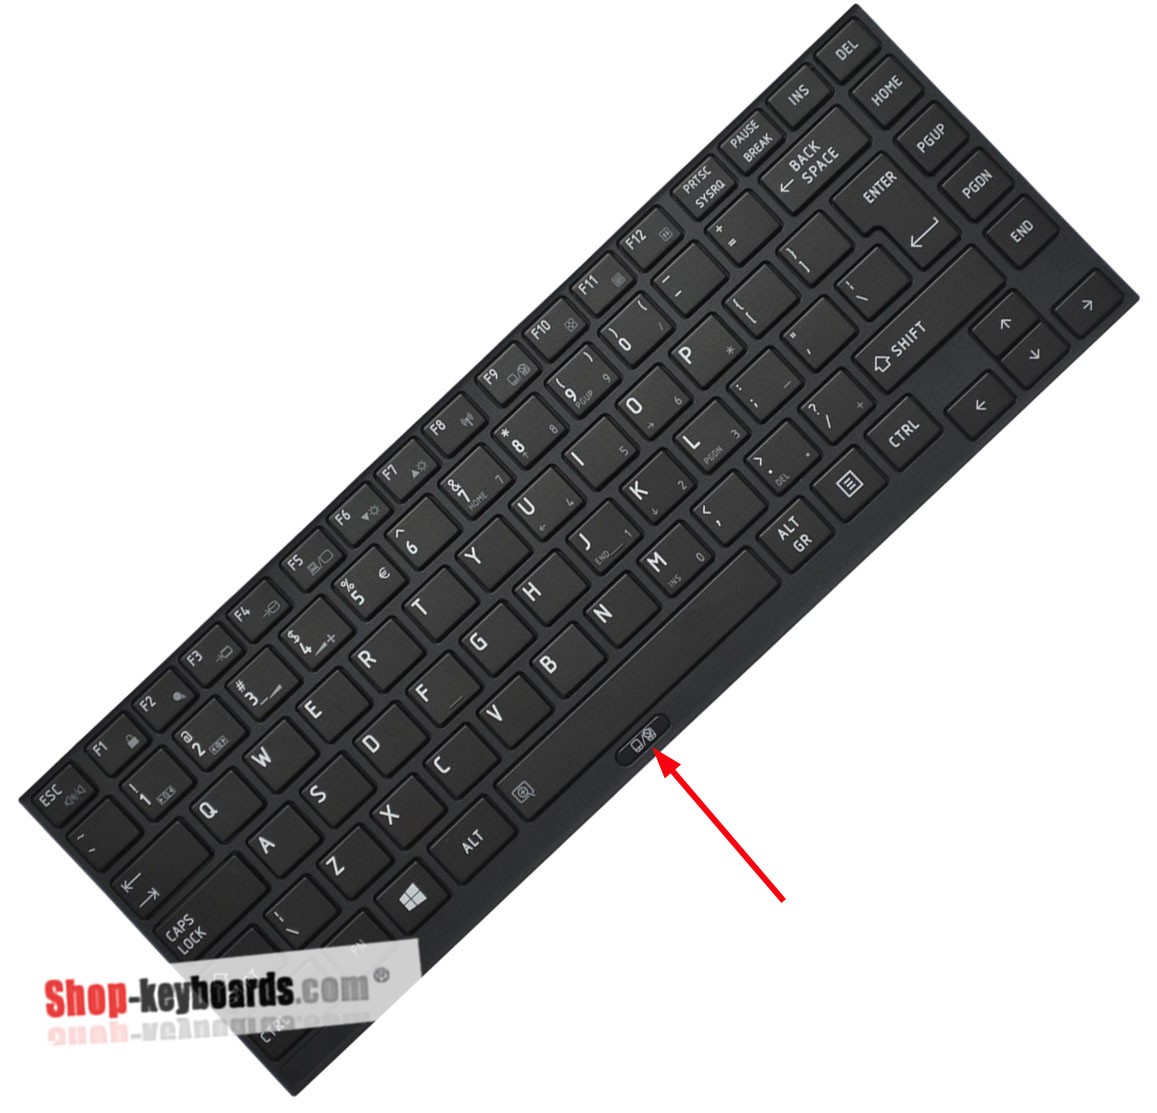 Toshiba Satellite R830 Series Keyboard replacement